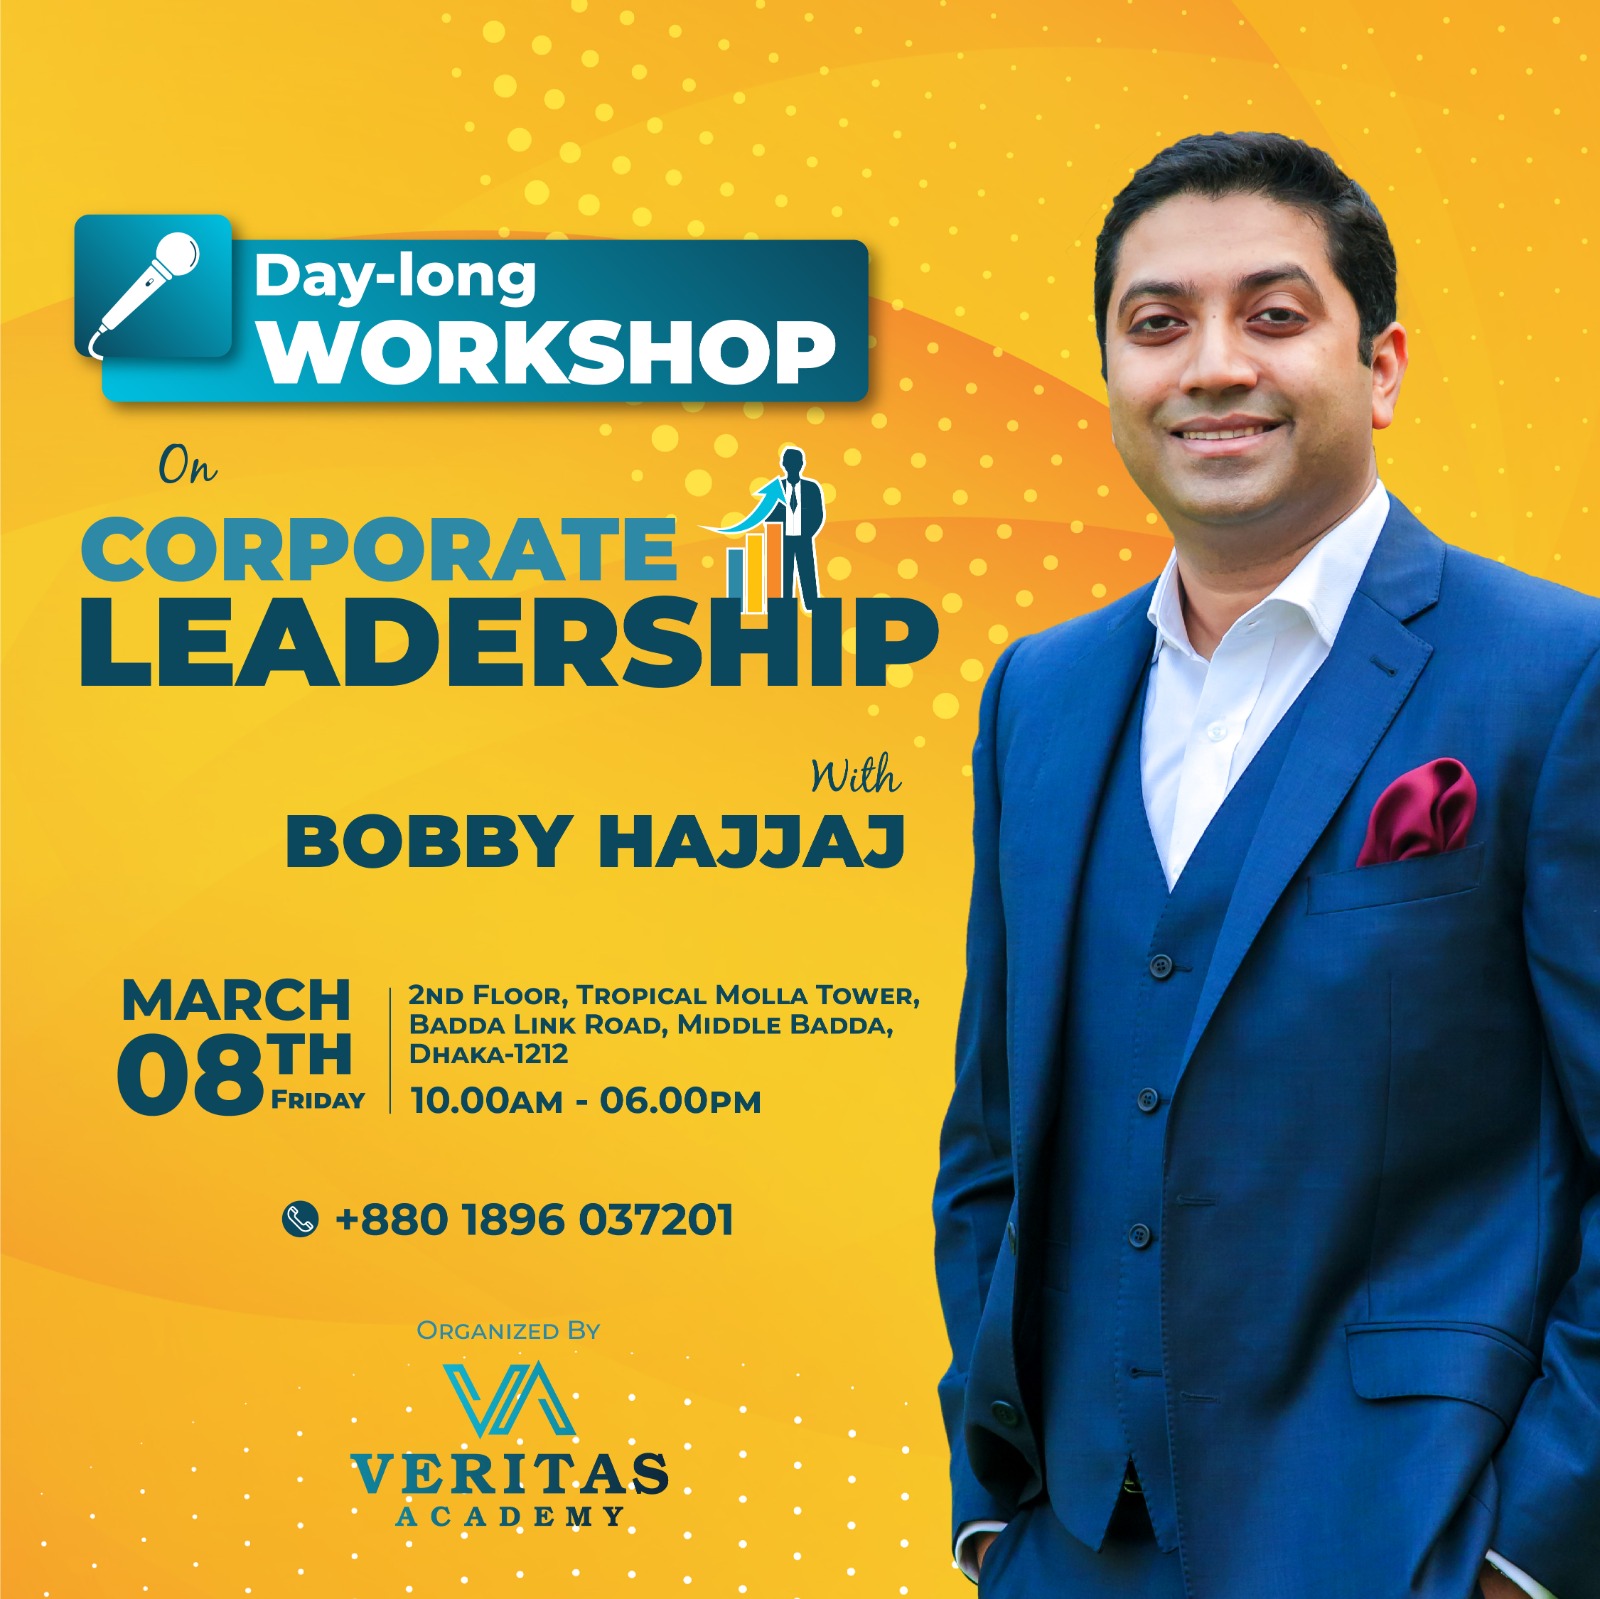 Day-long Workshop on Corporate Leadership with Bobby Hajjaj